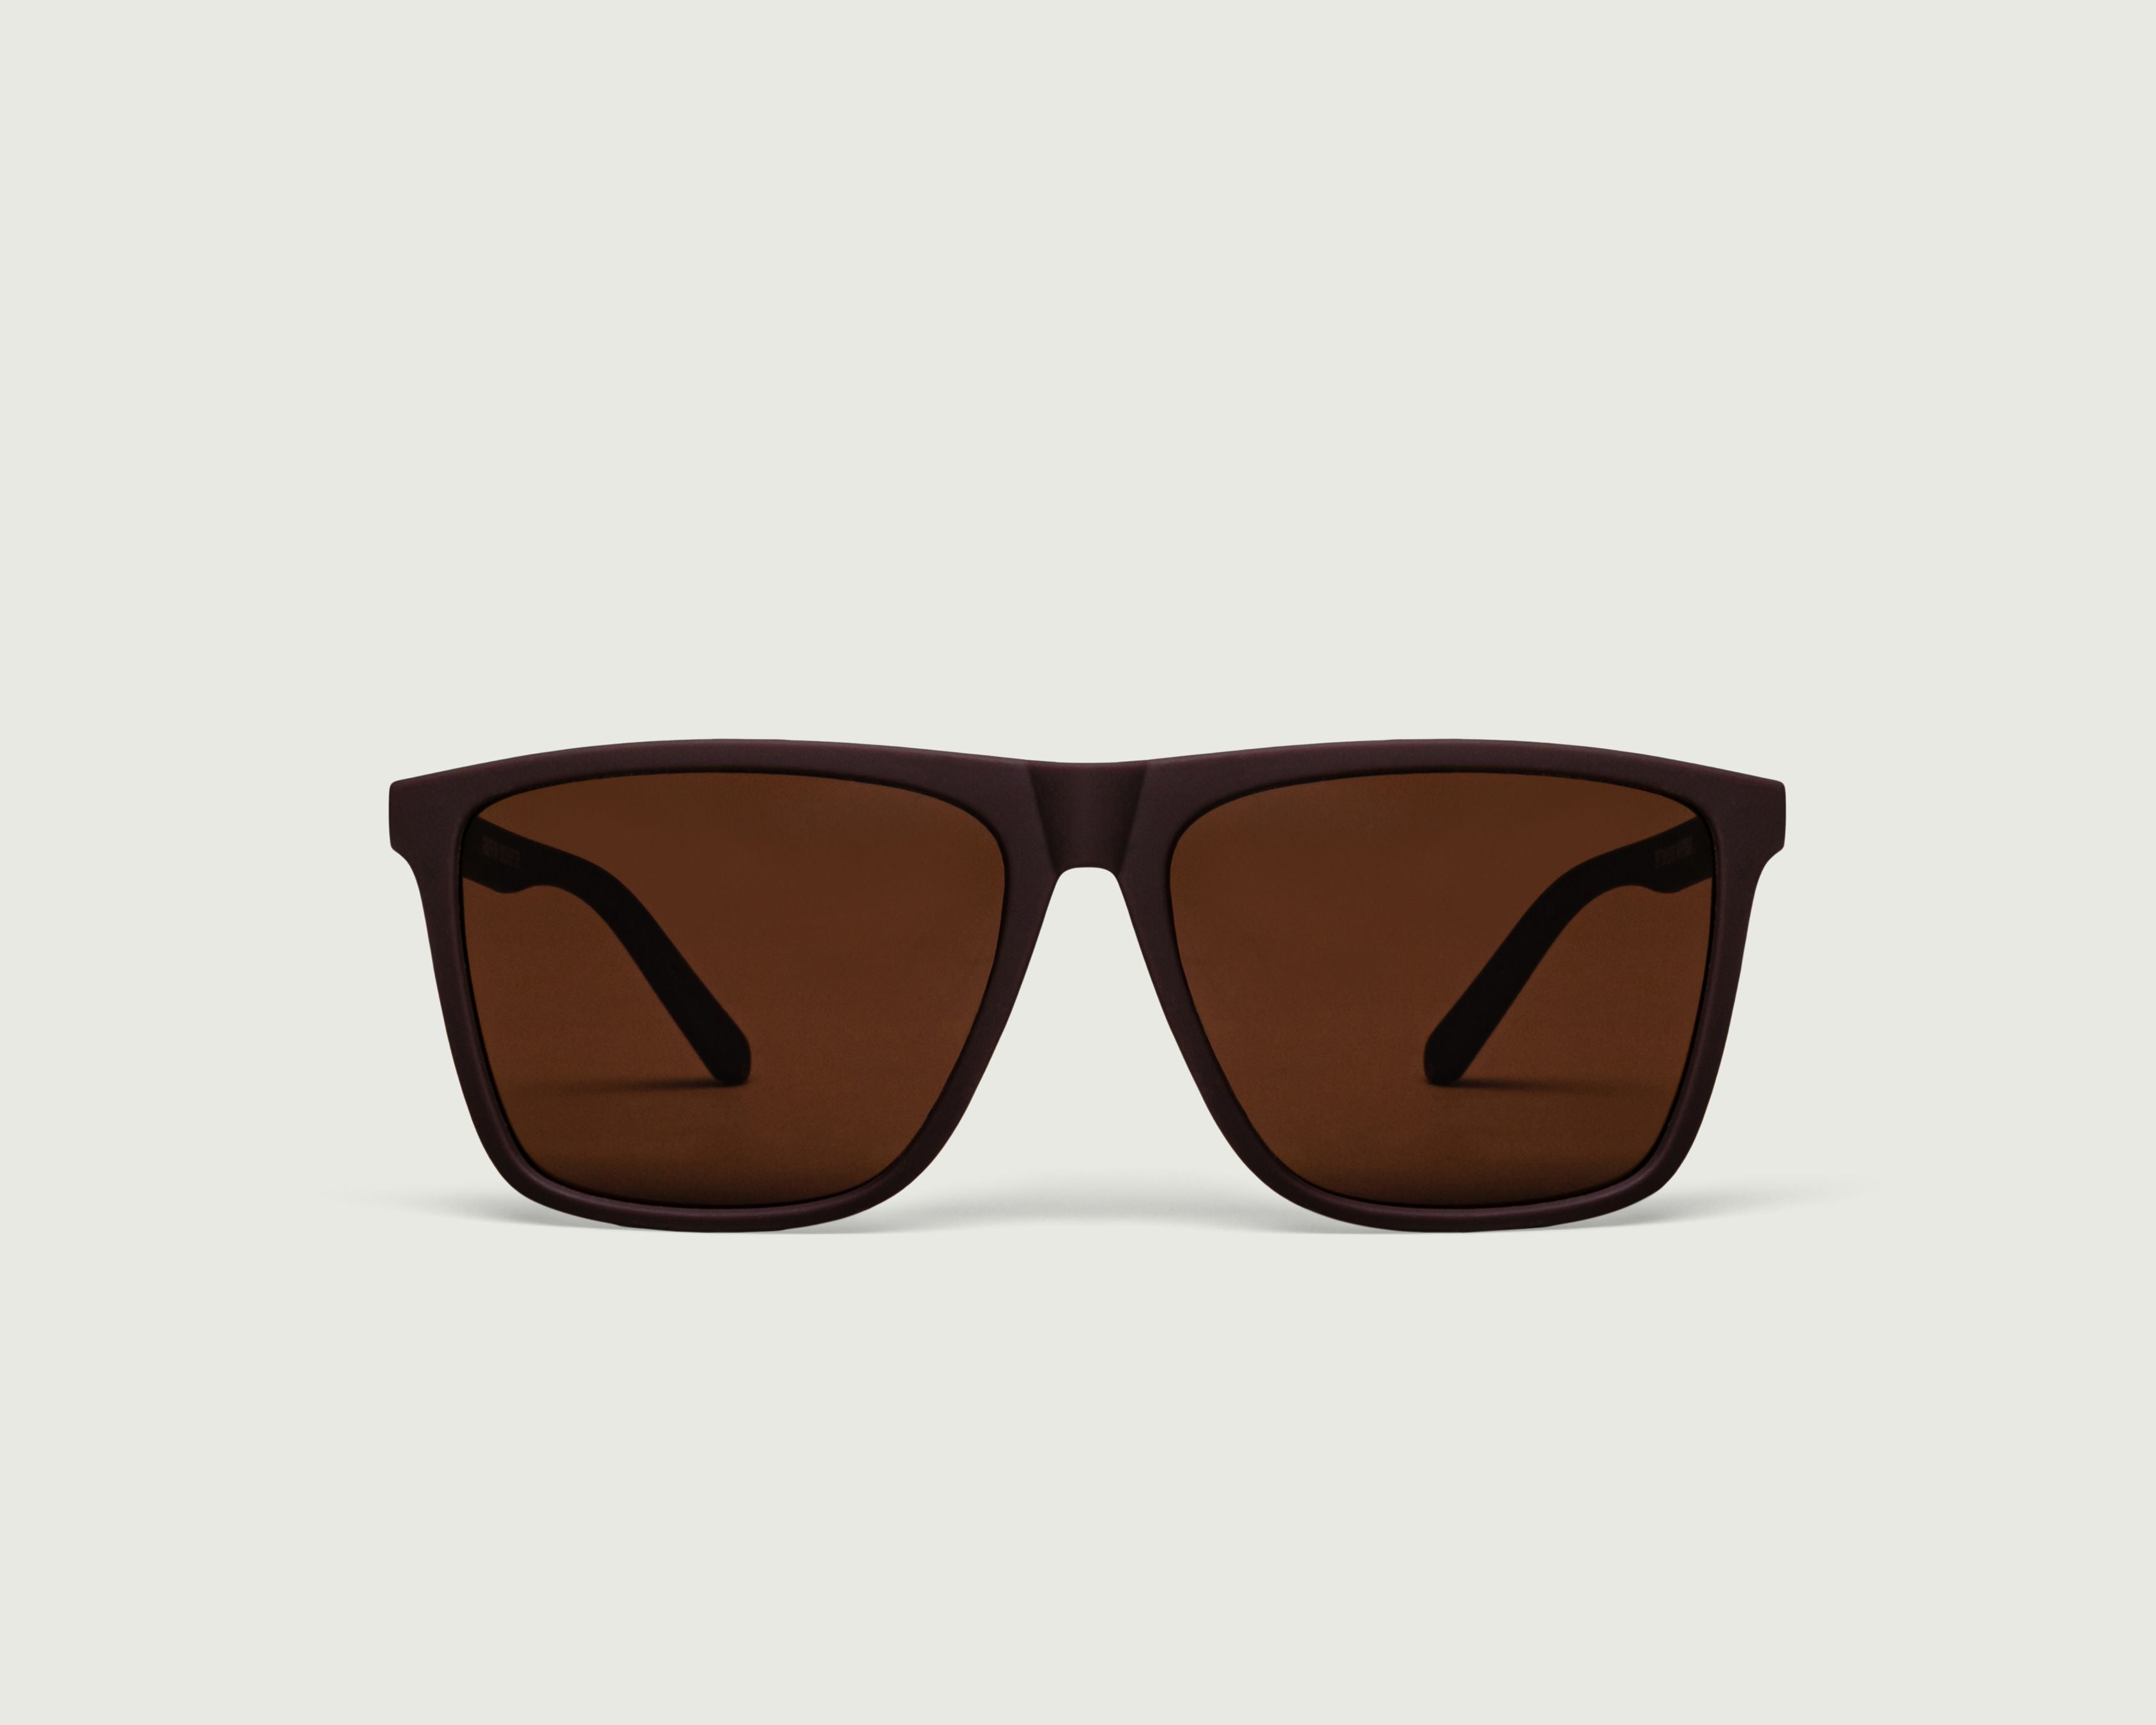 Brunette::Griffin Sunglasses square brown plastic front